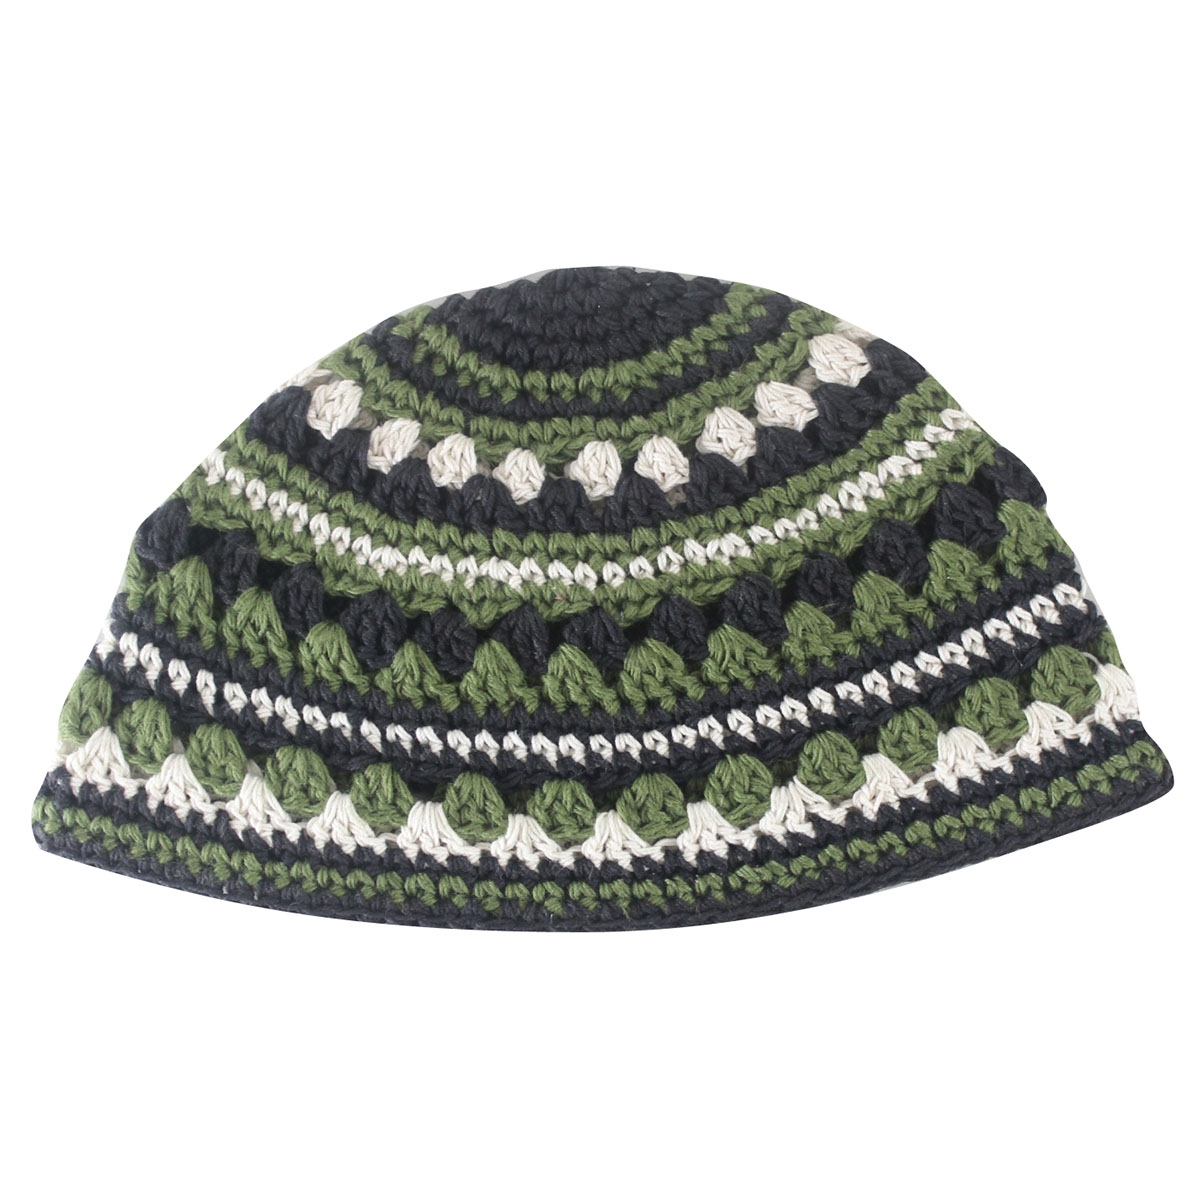 Crocheted Green, Black and White Frik Kippah  - 1